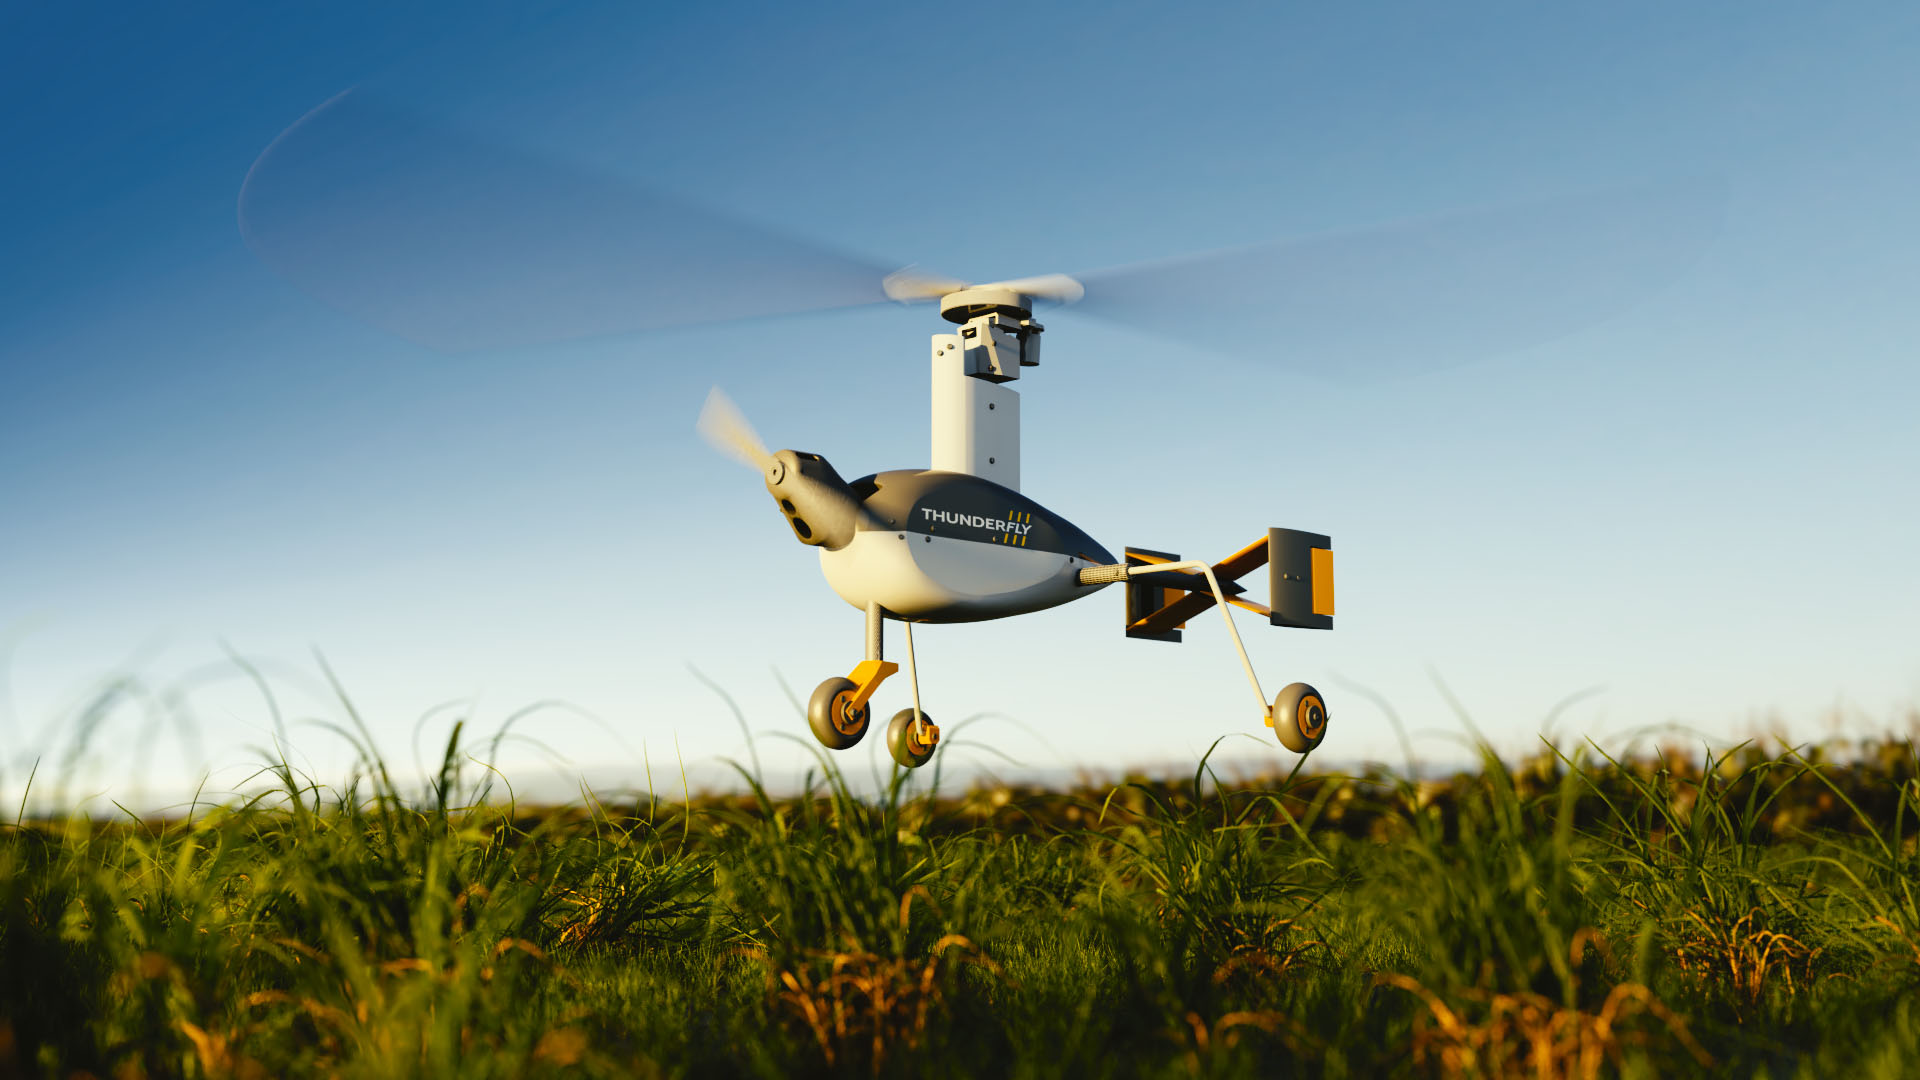 Drone autogyro grass field landing